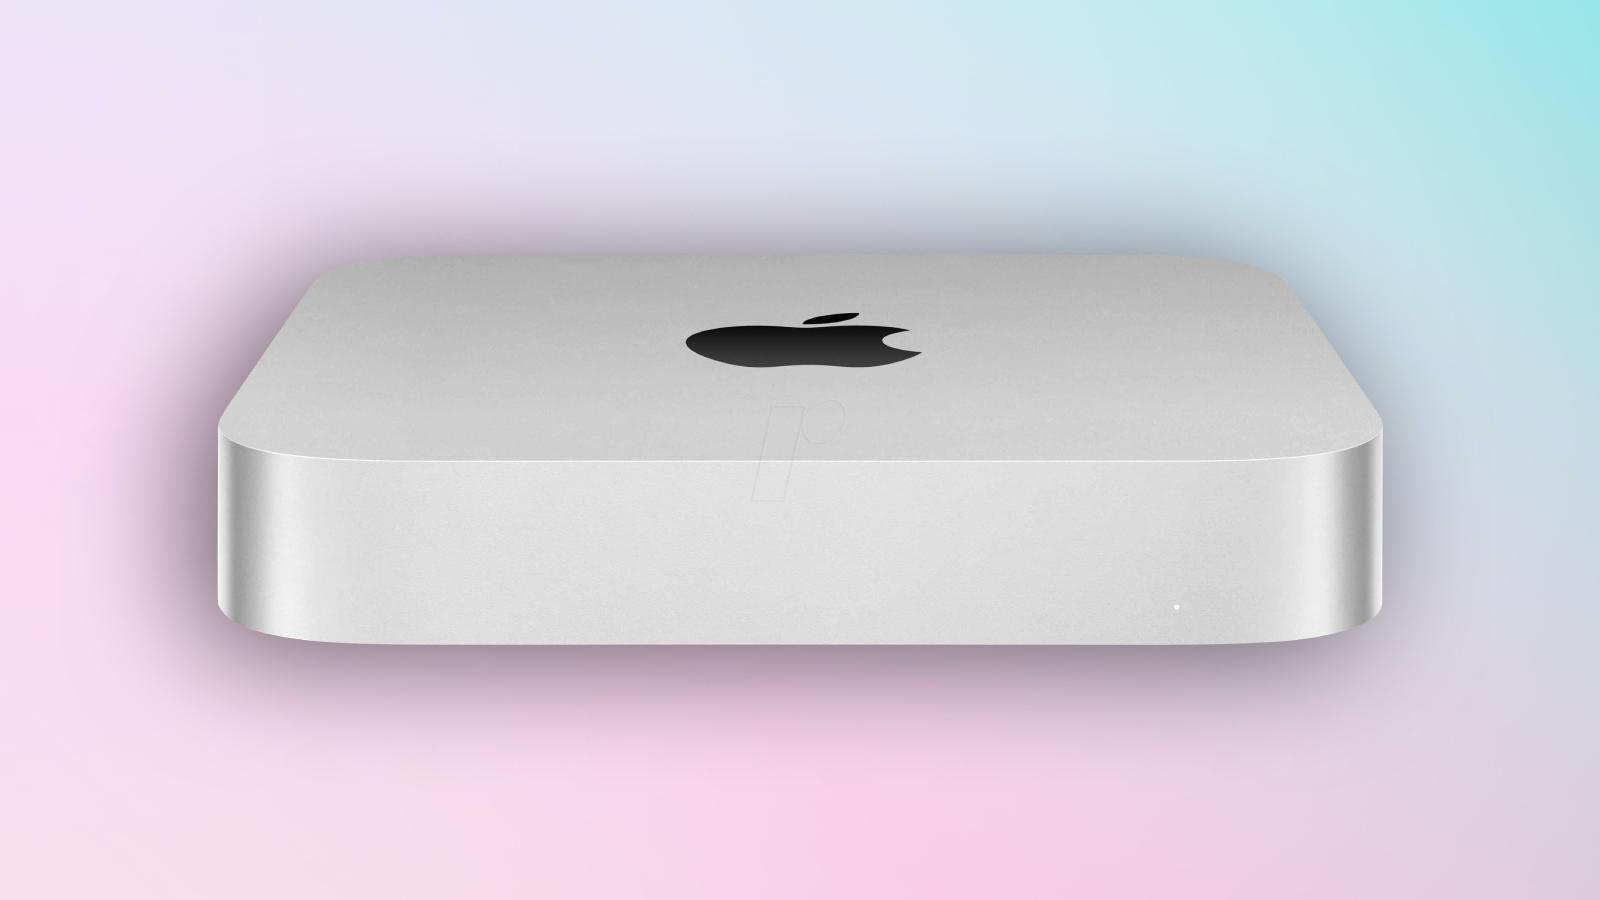 M2 Mac Mini on a gradient background